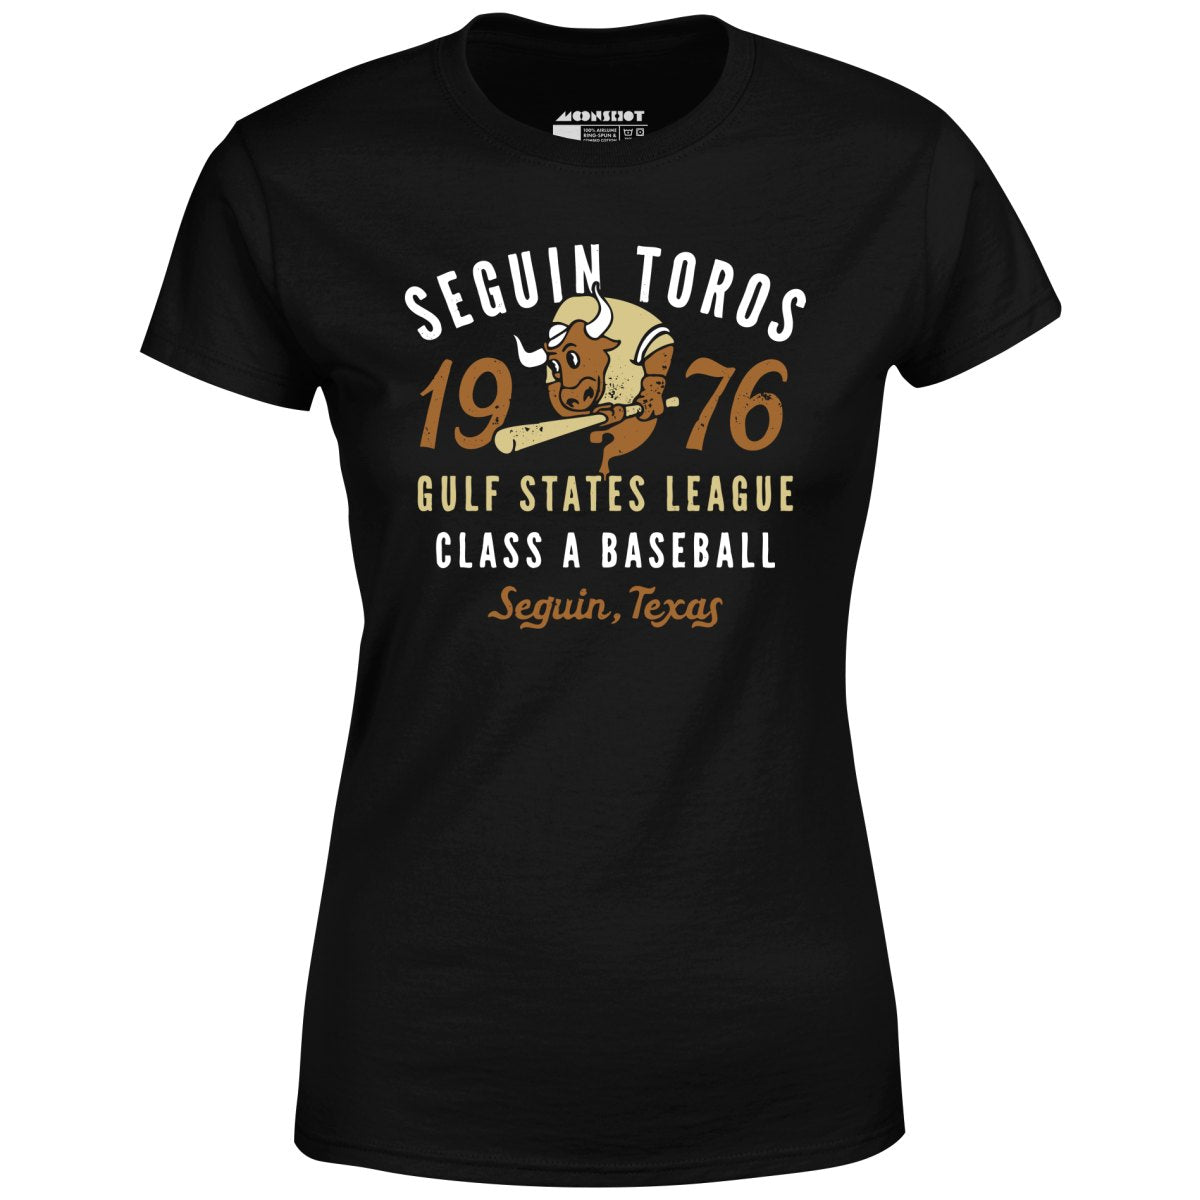 Seguin Toros - Texas - Vintage Defunct Baseball Teams - Women's T-Shirt